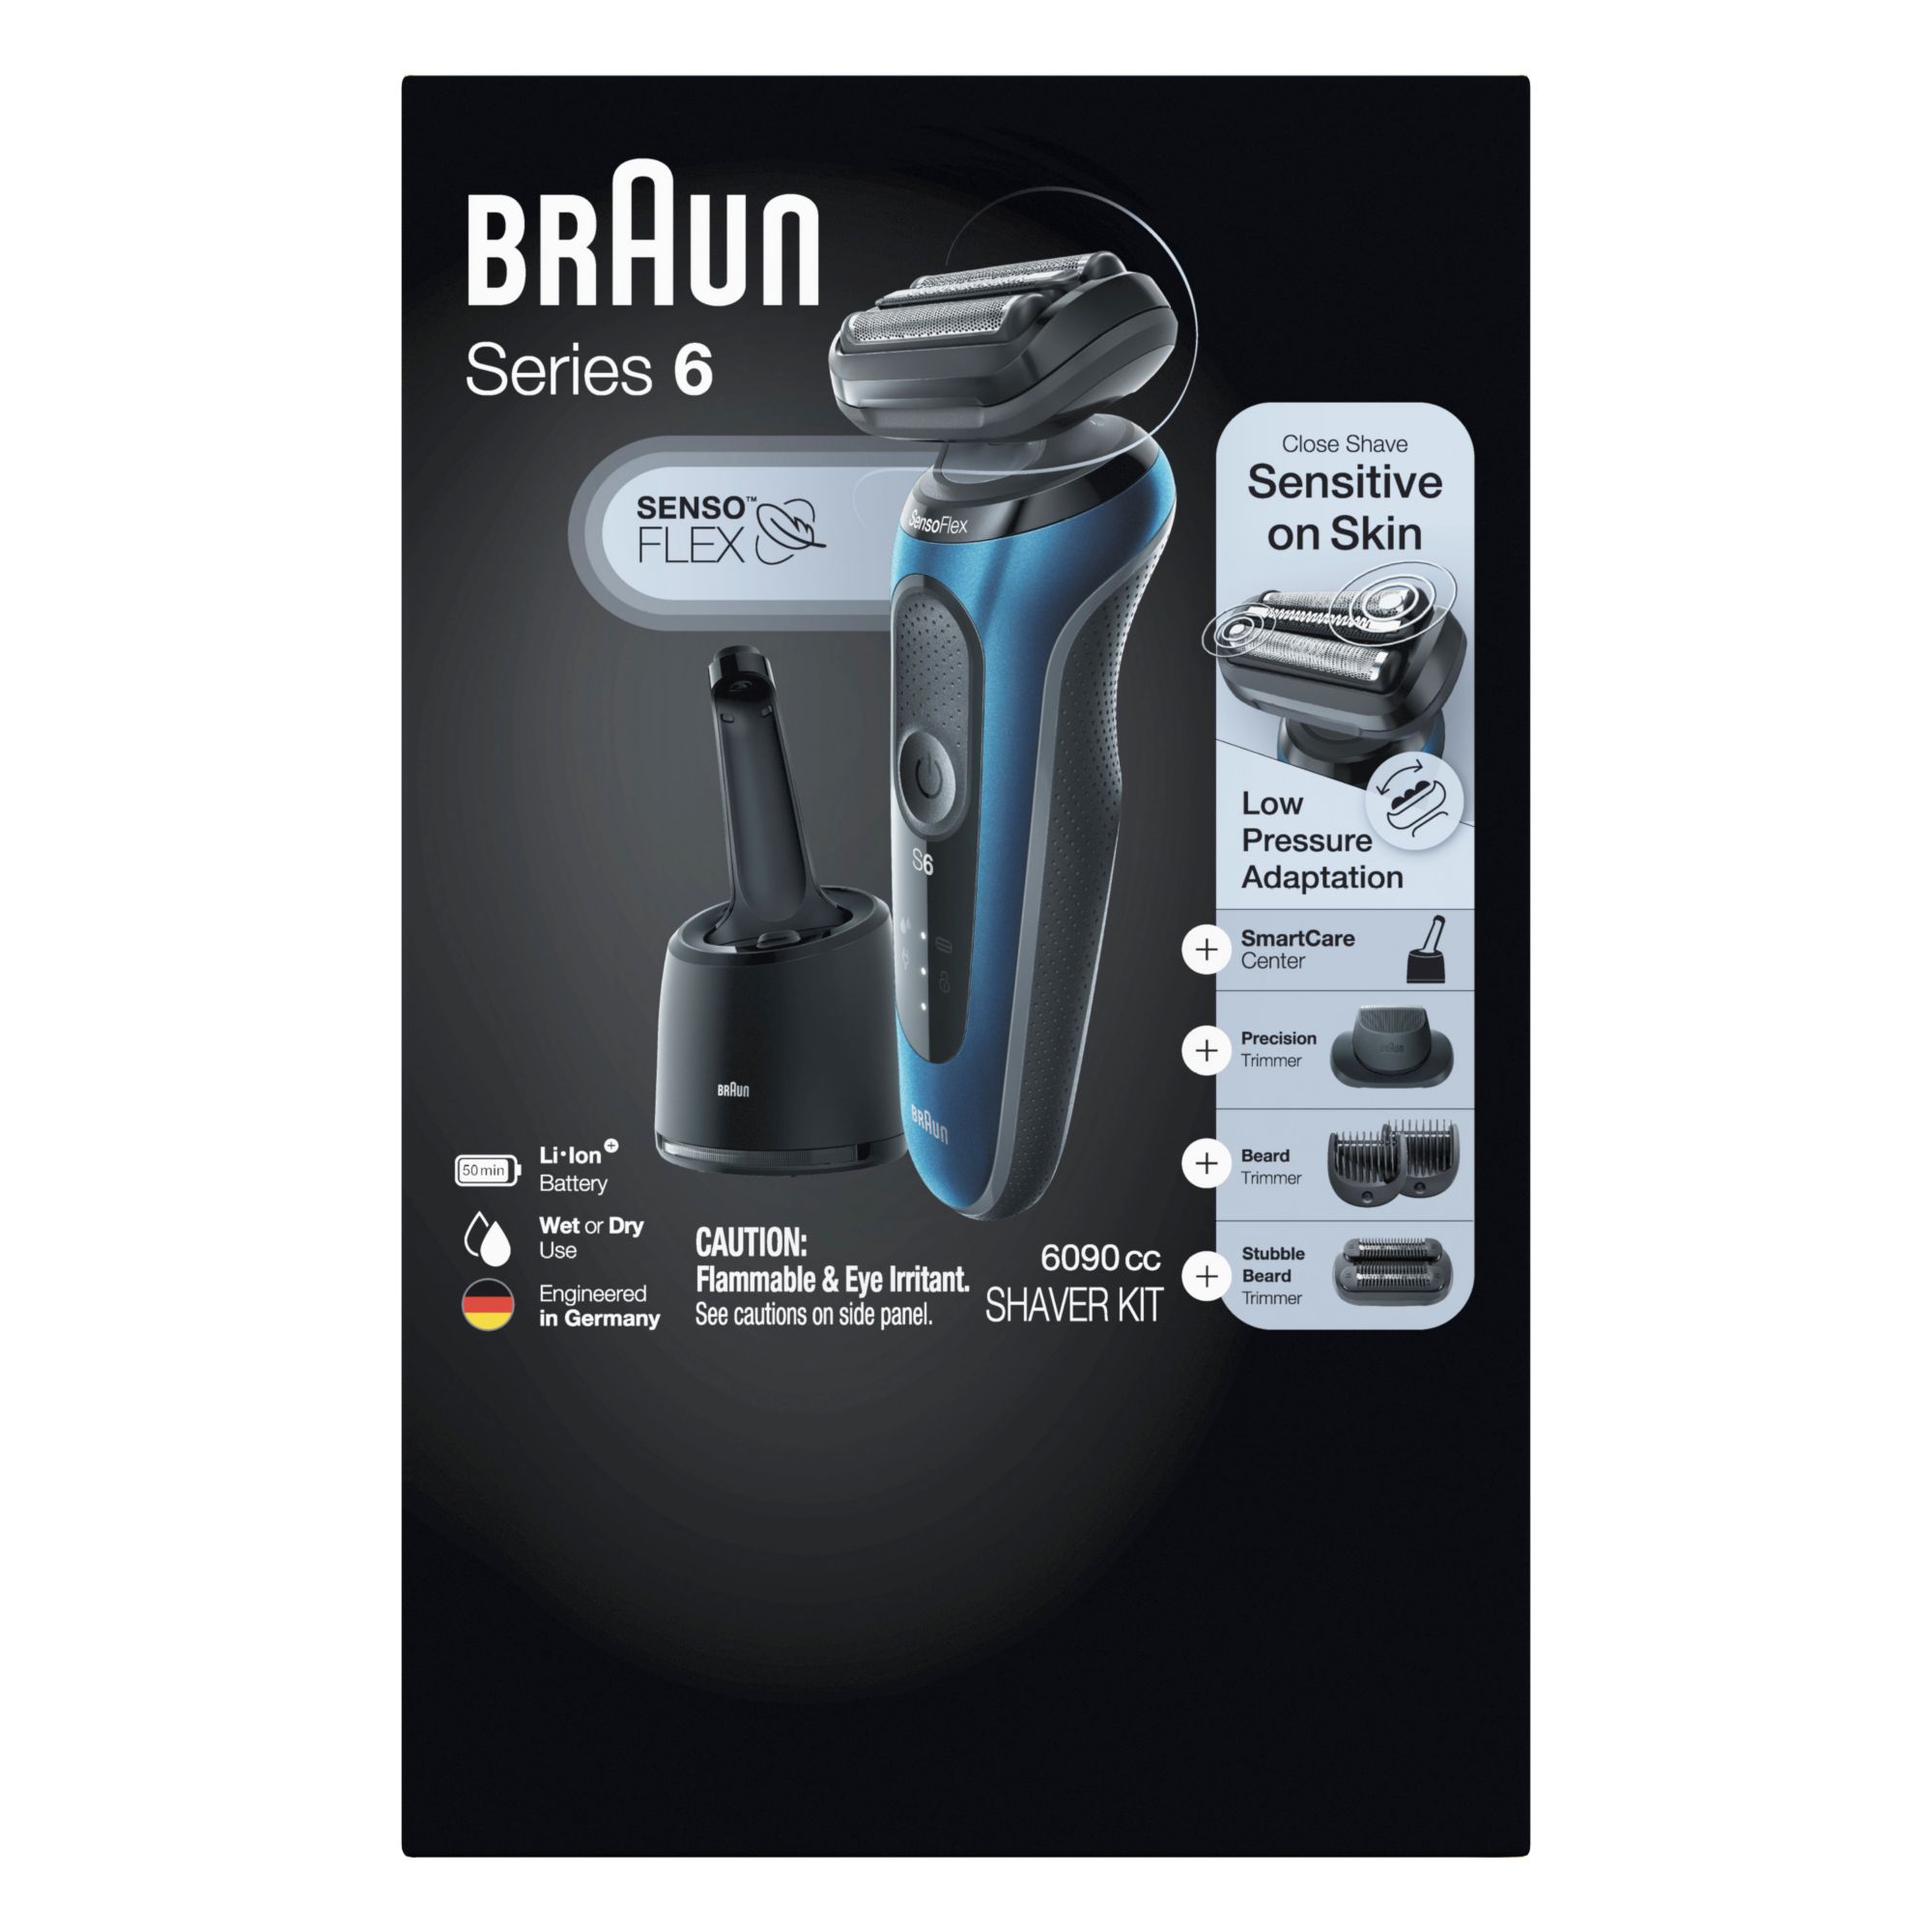 Braun Series 9 9370cc Men's Cordless Electric Shaver